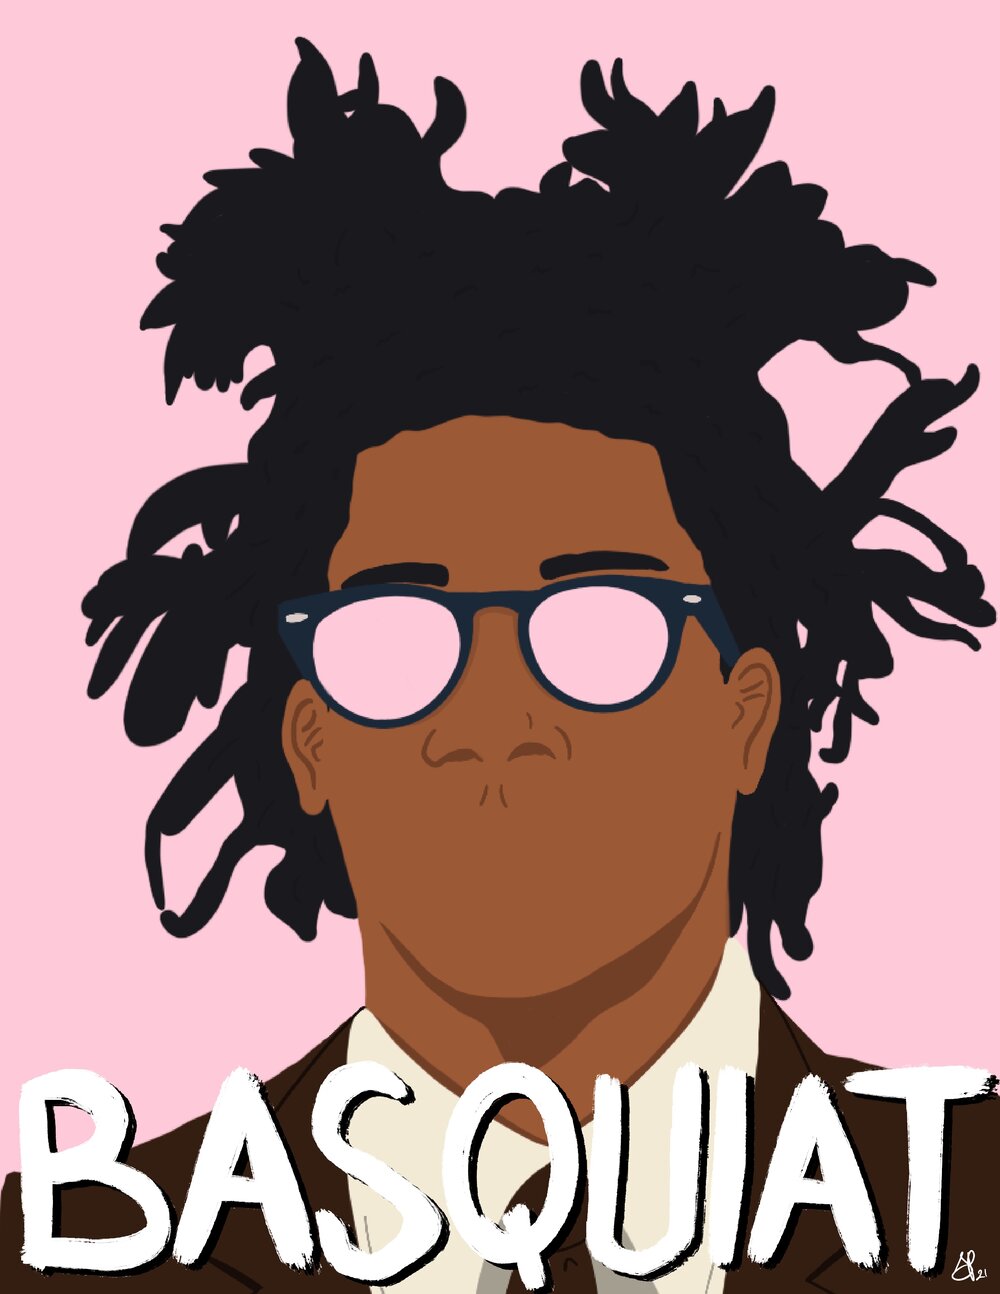 JEAN-MICHEL BASQUIAT - BASQUIAT* - Limited Print by BOYSDONTDRAW